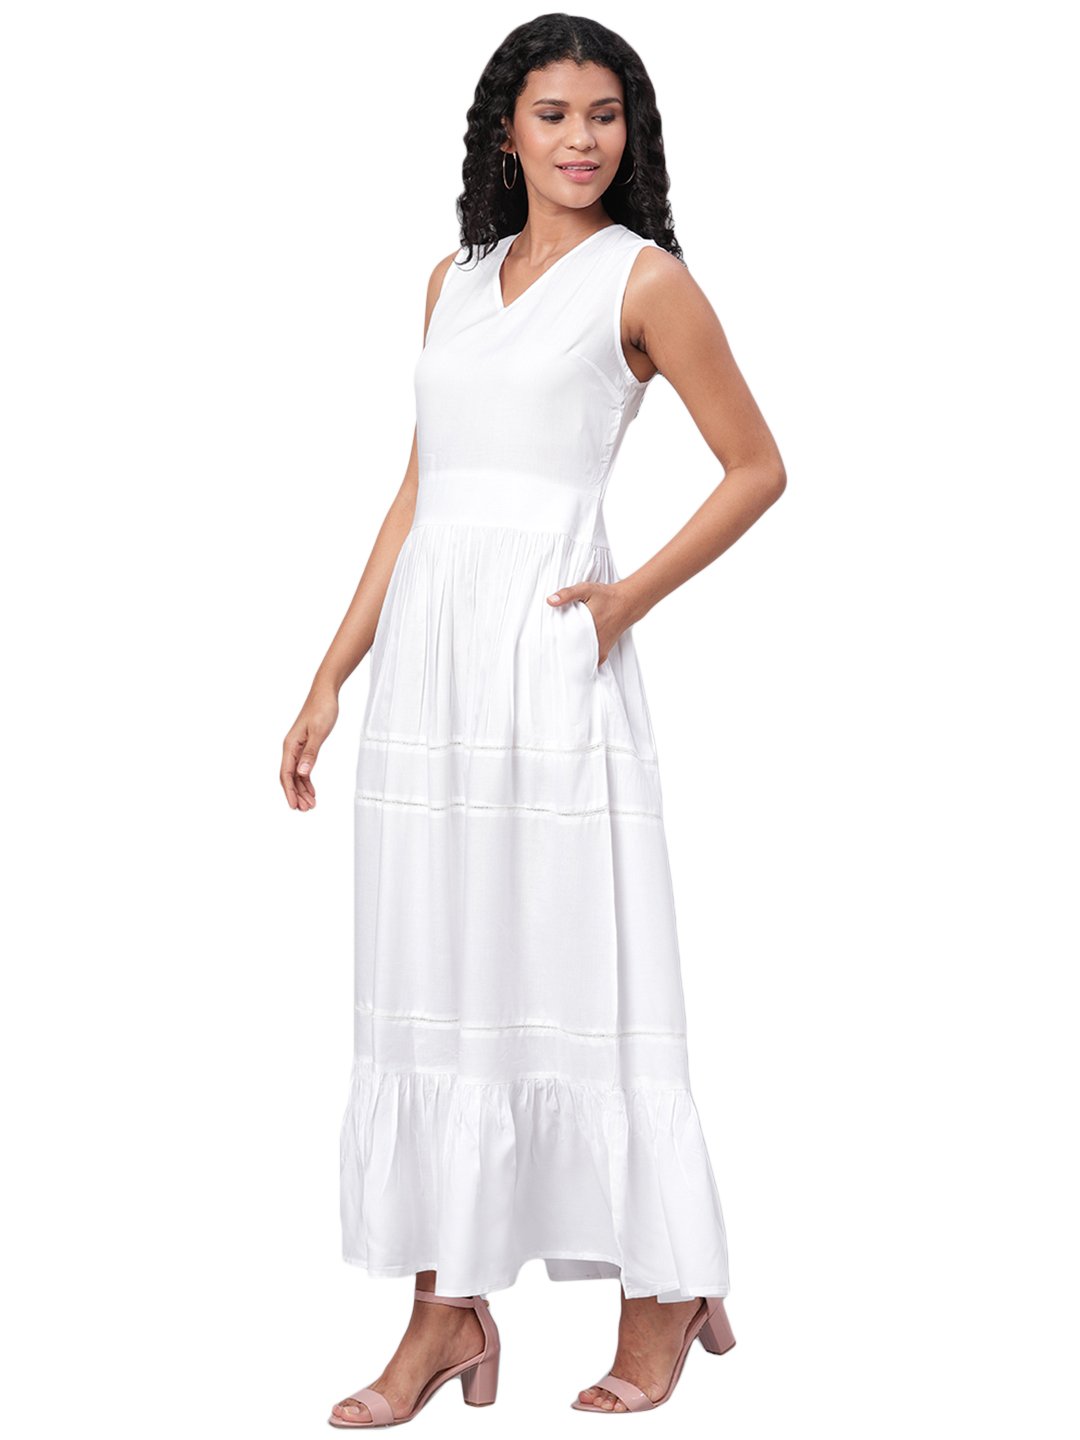 Women's White Solid Sleeveless Cotton V Neck Casual Dress - Myshka